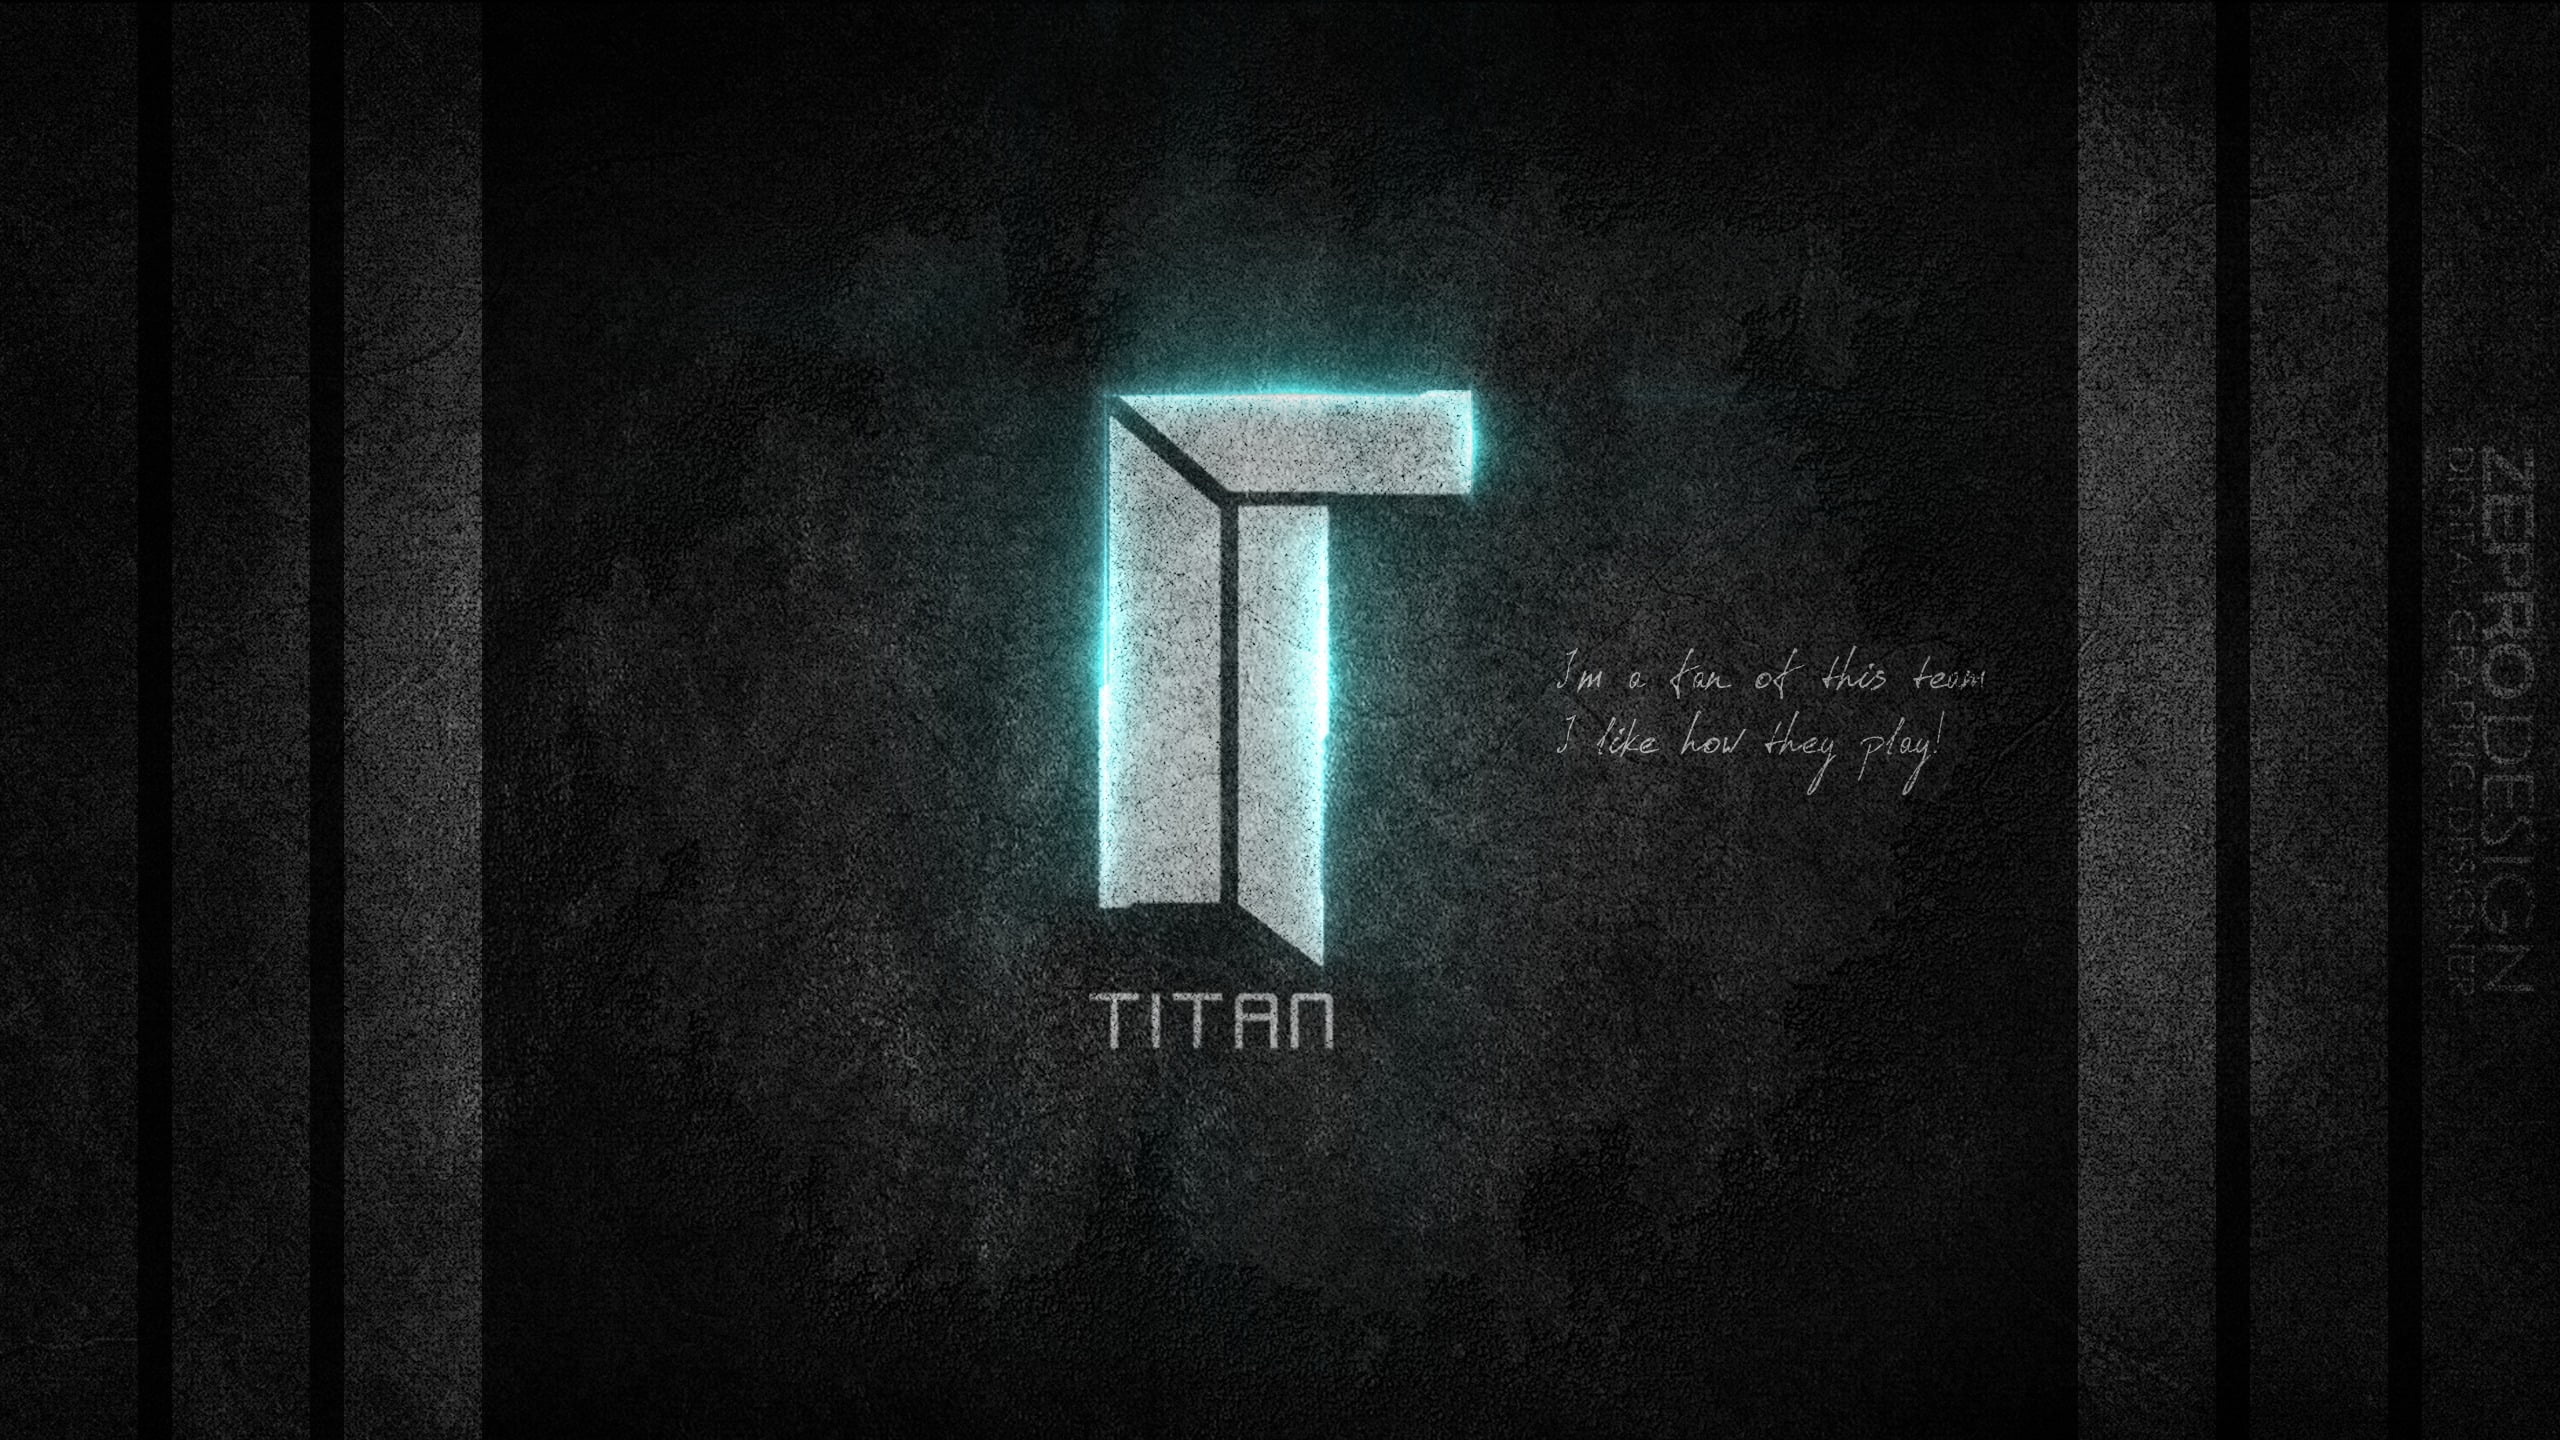 Titan logo, design, team, game, art, games, hi-tech, new, counter-strike